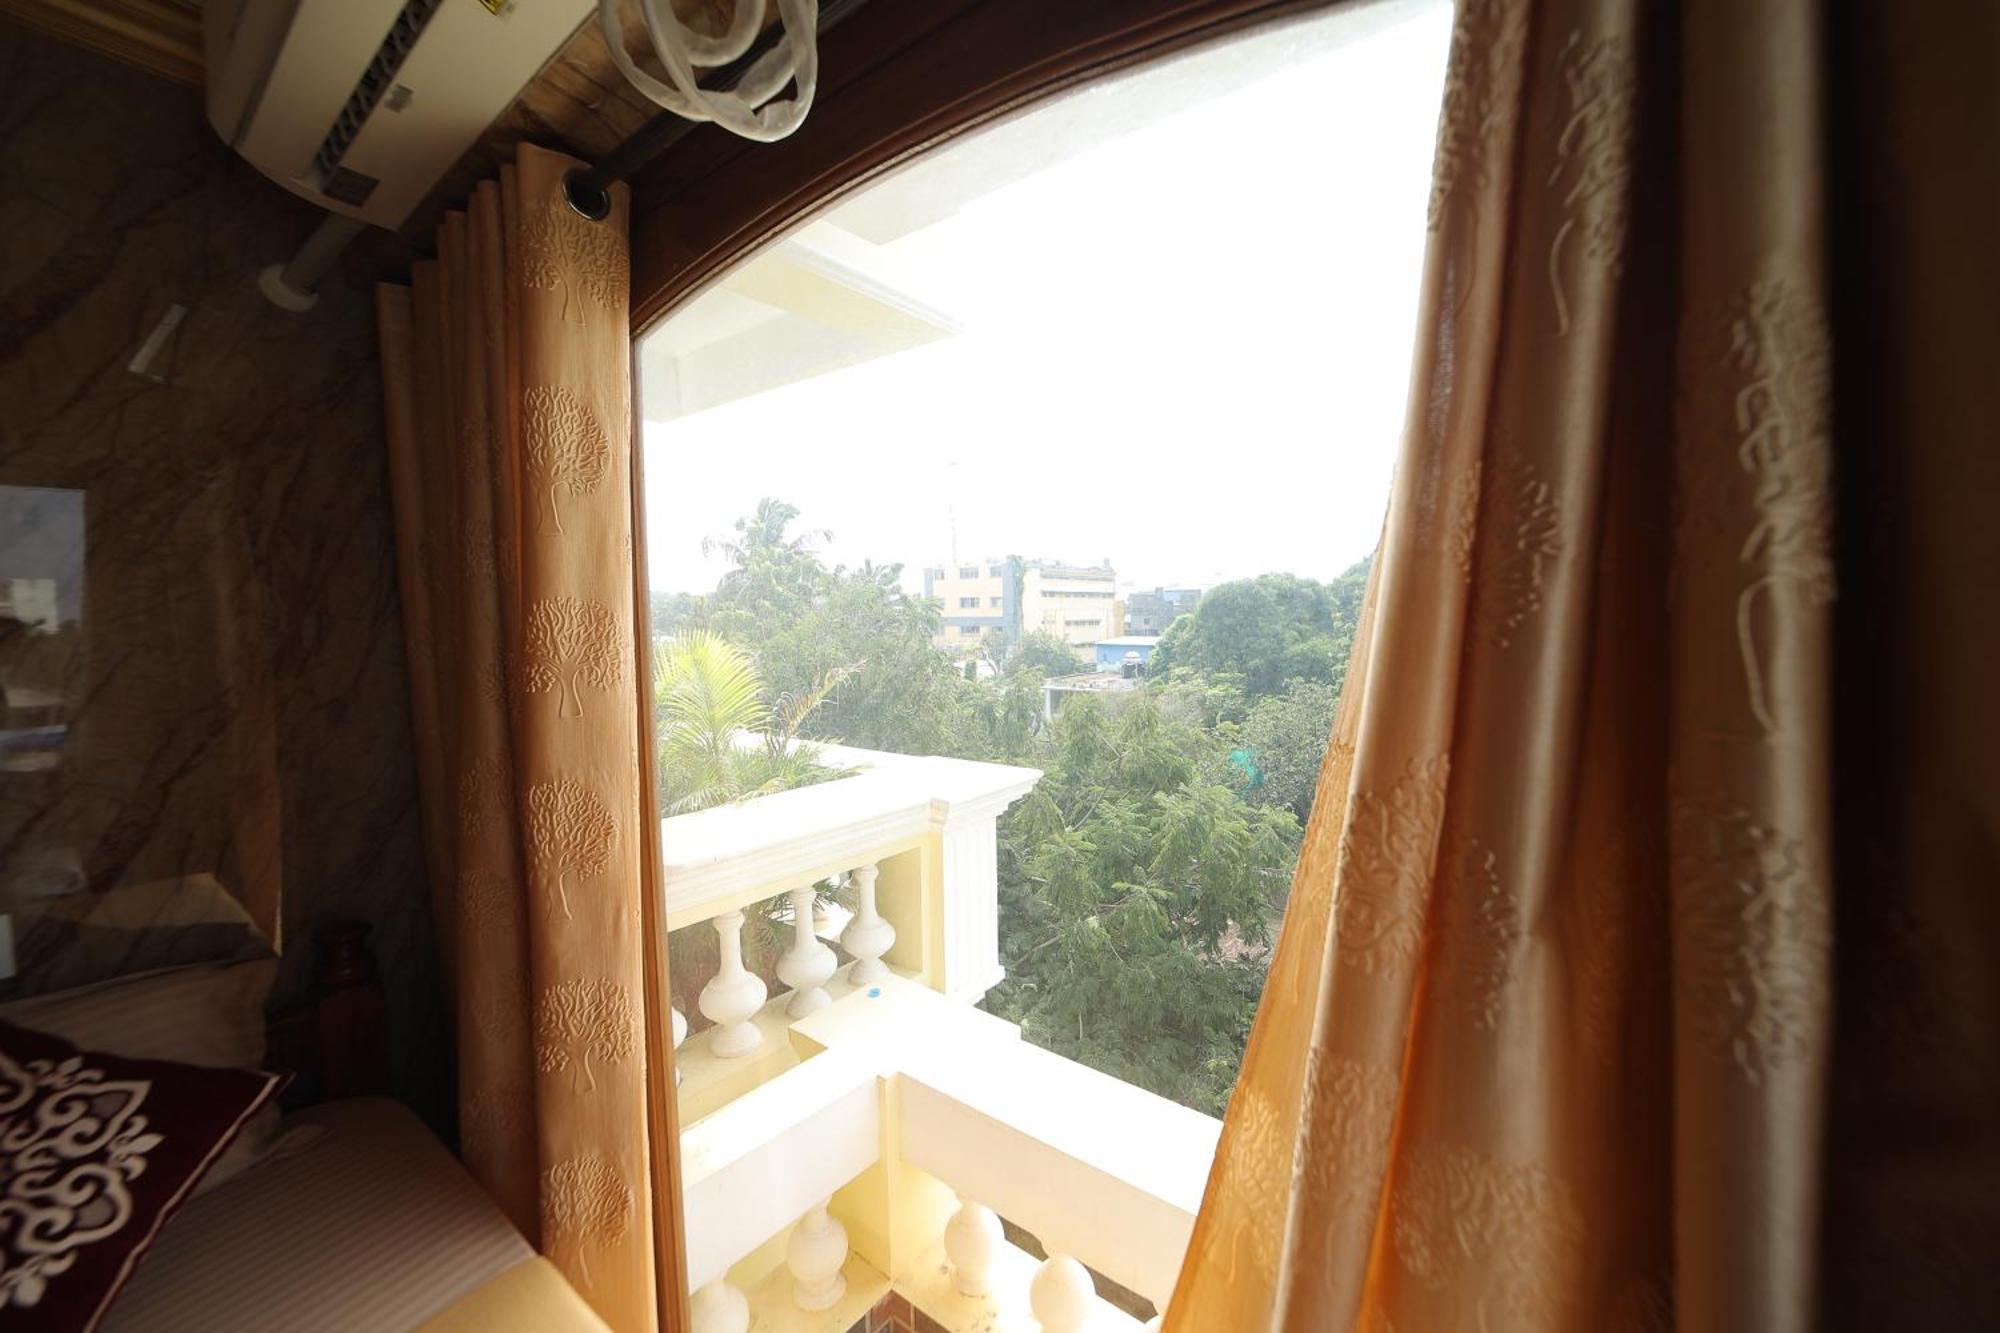 French Breeze Residency Hotel Pondicherry Exterior photo